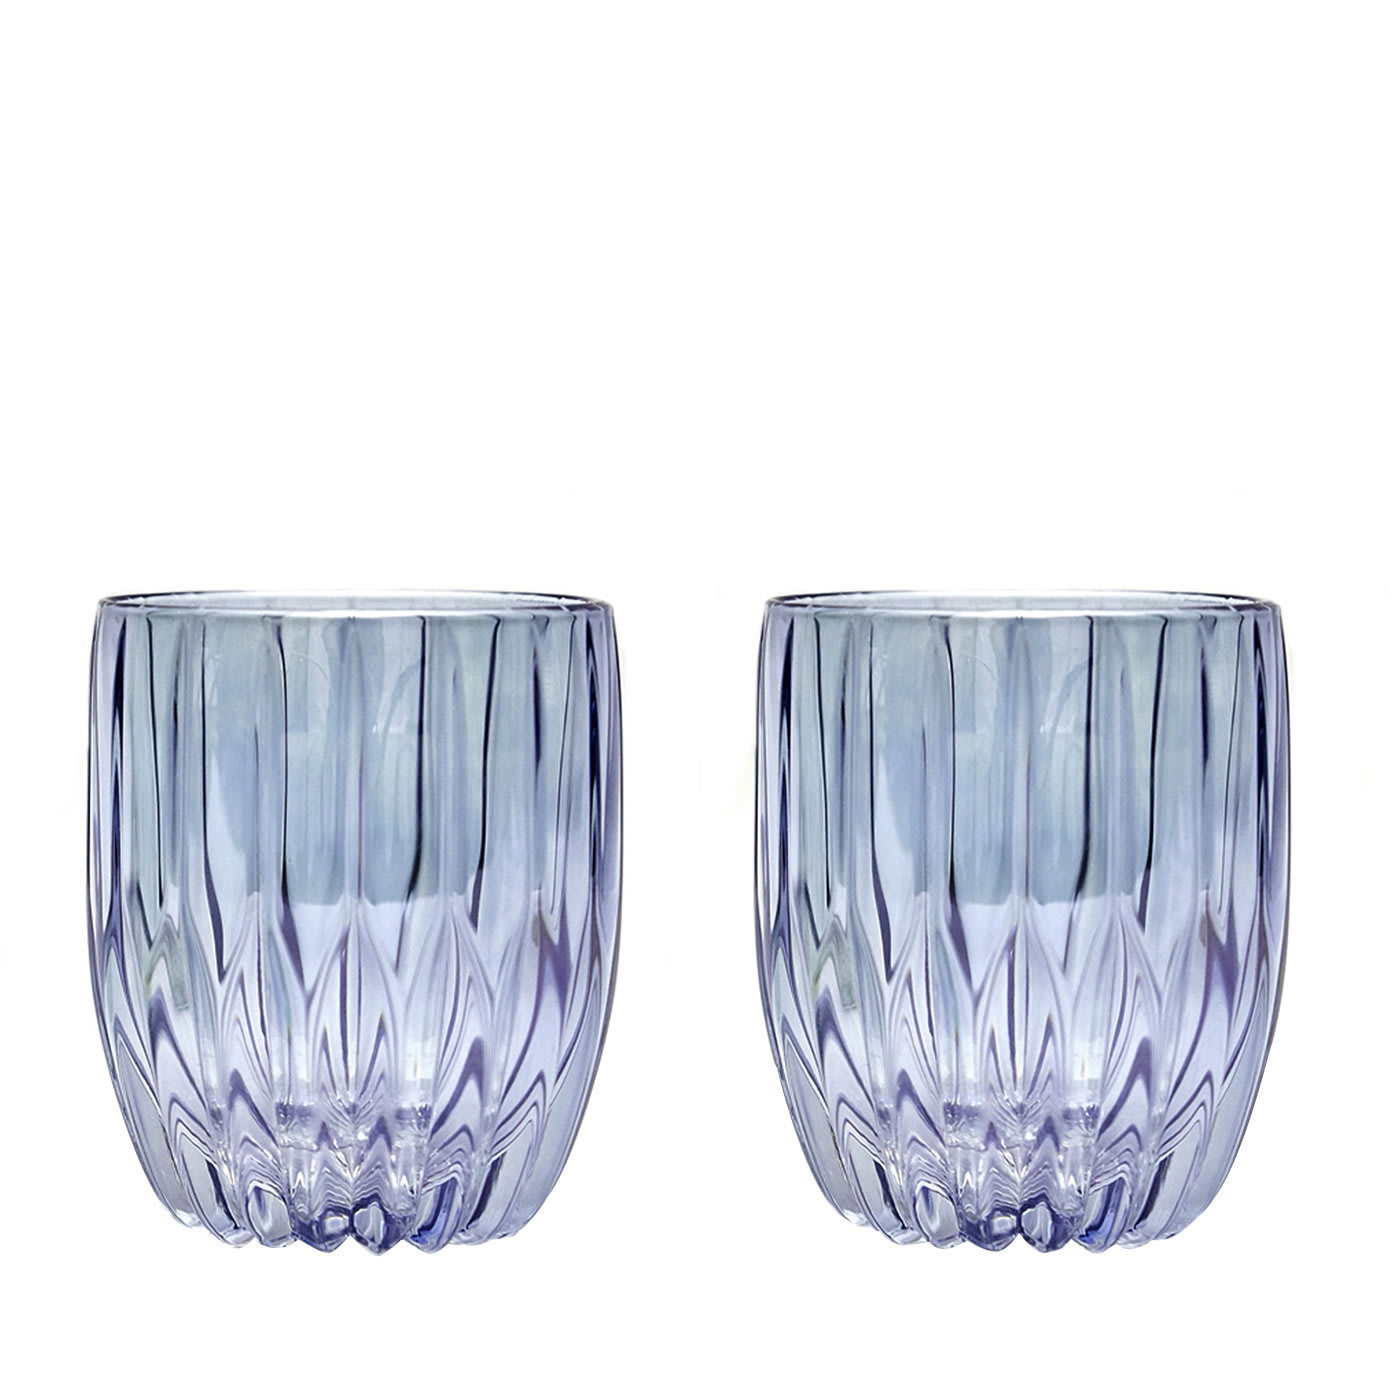 Set of 2 Small Blue Tumbler Glasses - Luisa Beccaria